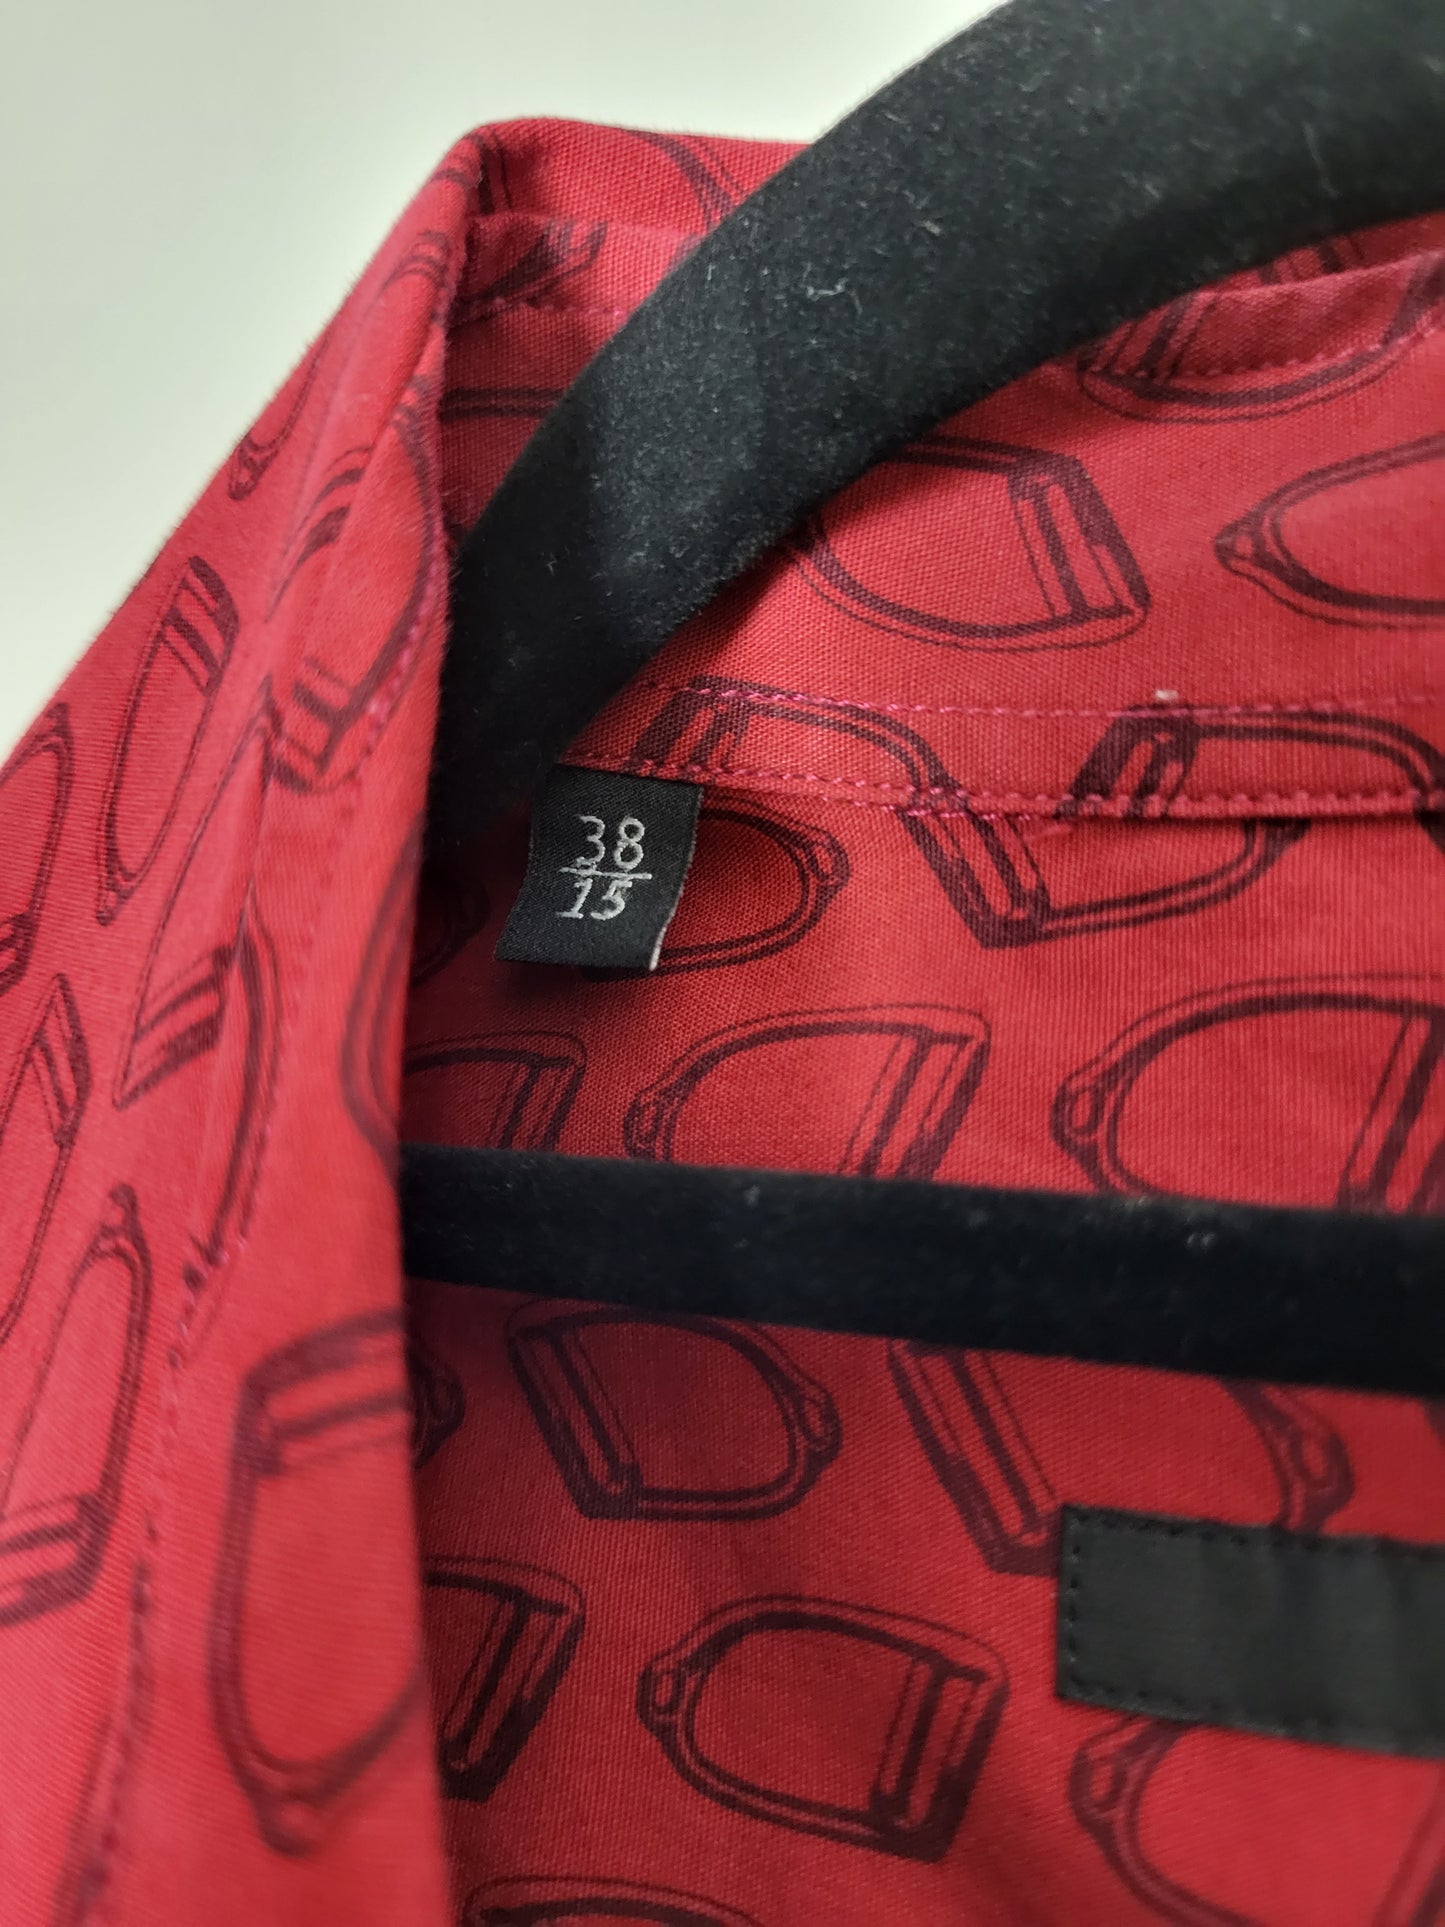 Gucci - Hemd - Print mit Muster - Rot - Herren - L